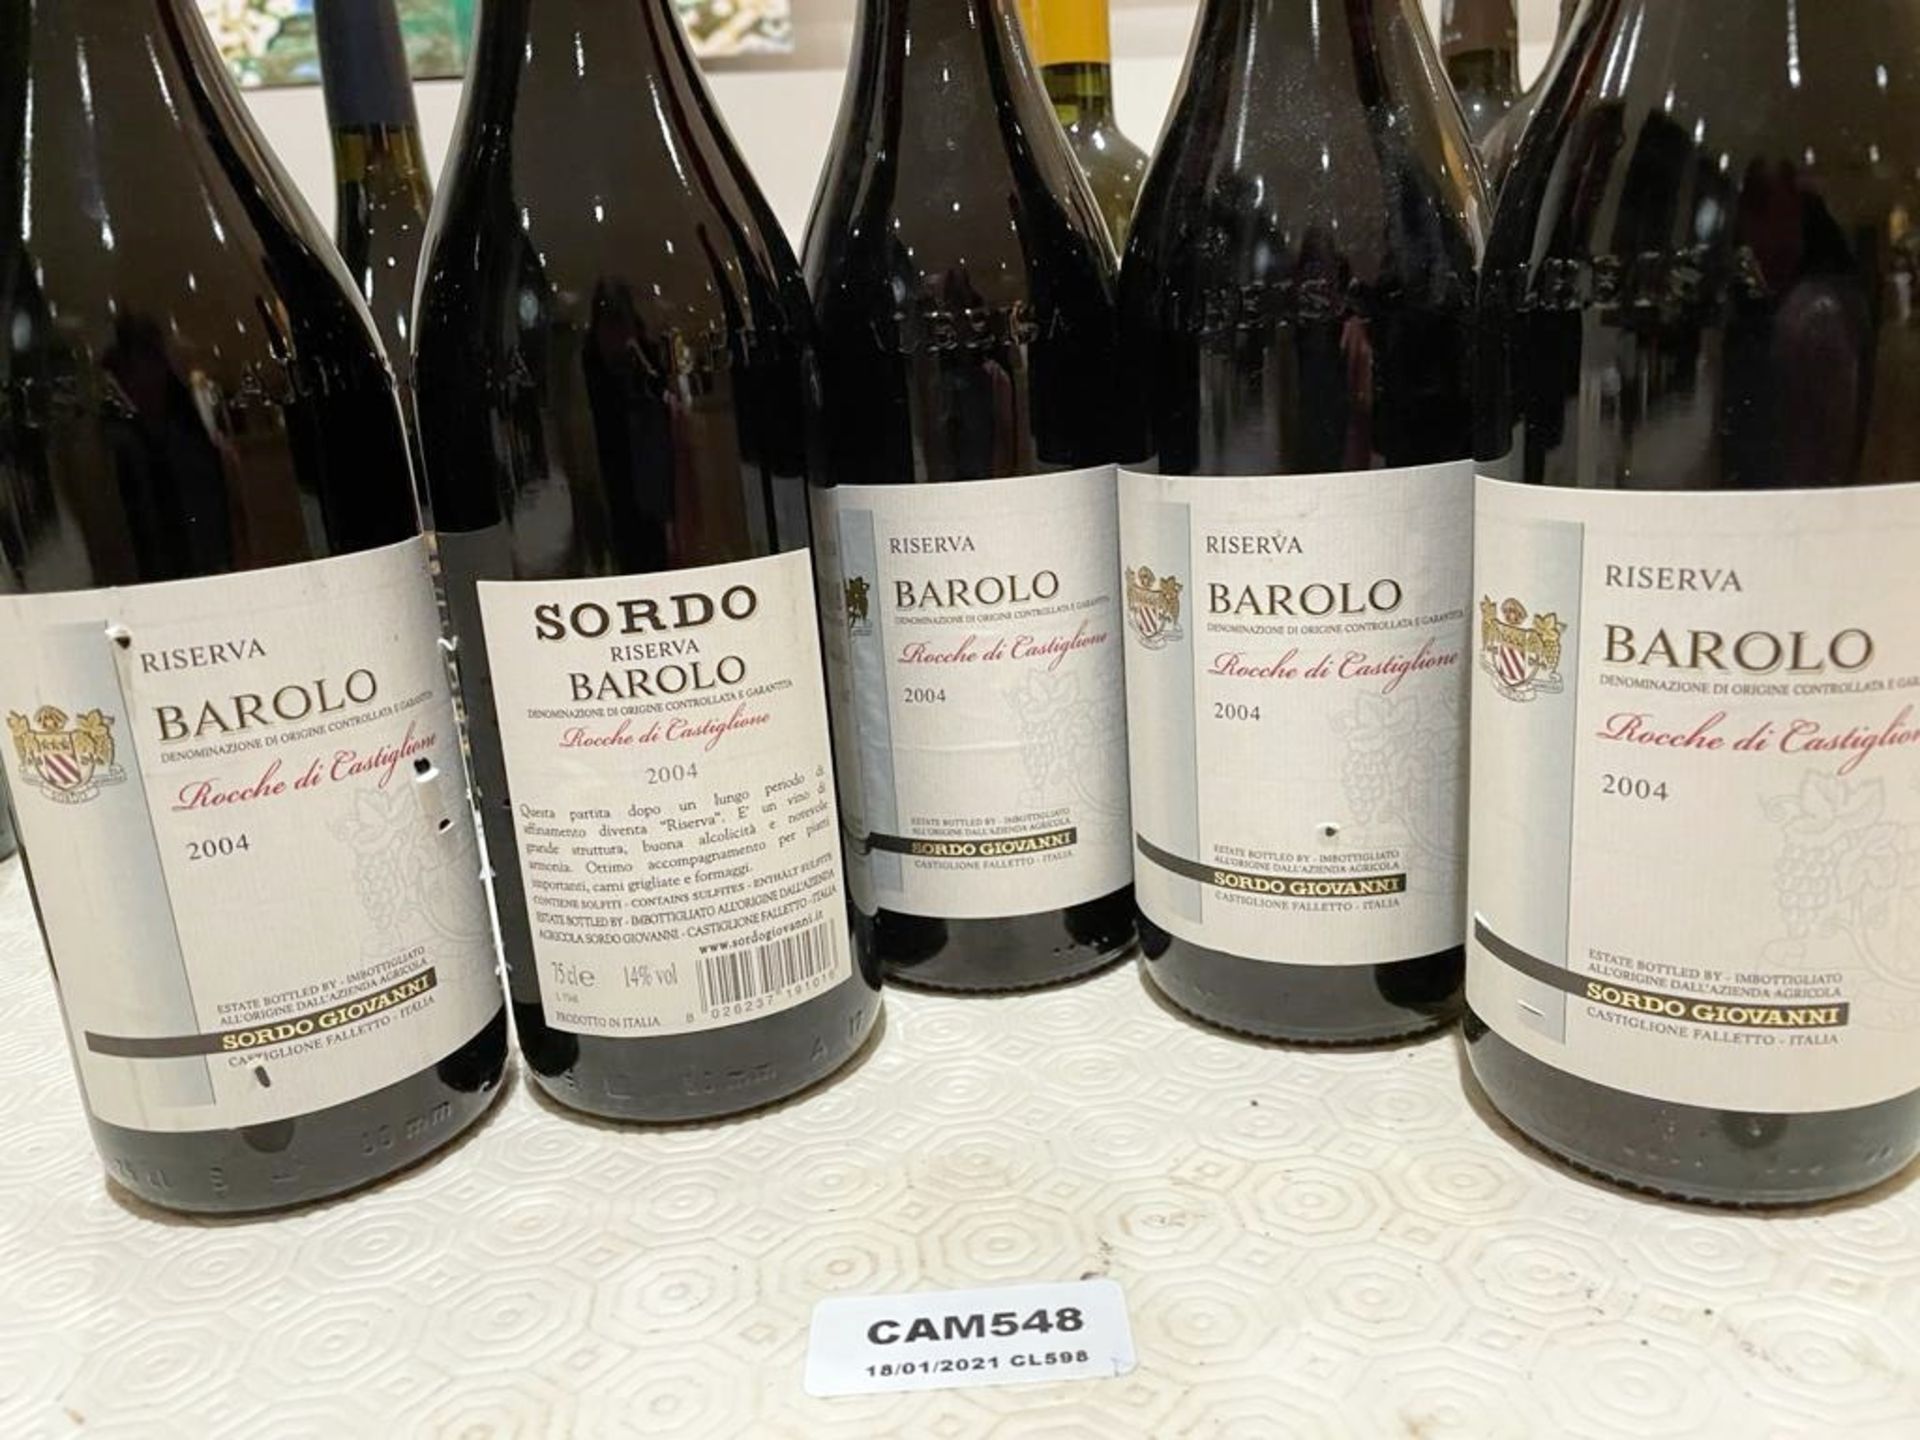 5 x Bottles Of SORDO BAROLO - 2004 - 75cl - New/Unopened Restaurant Stock - Ref: CAM548 - Image 2 of 3